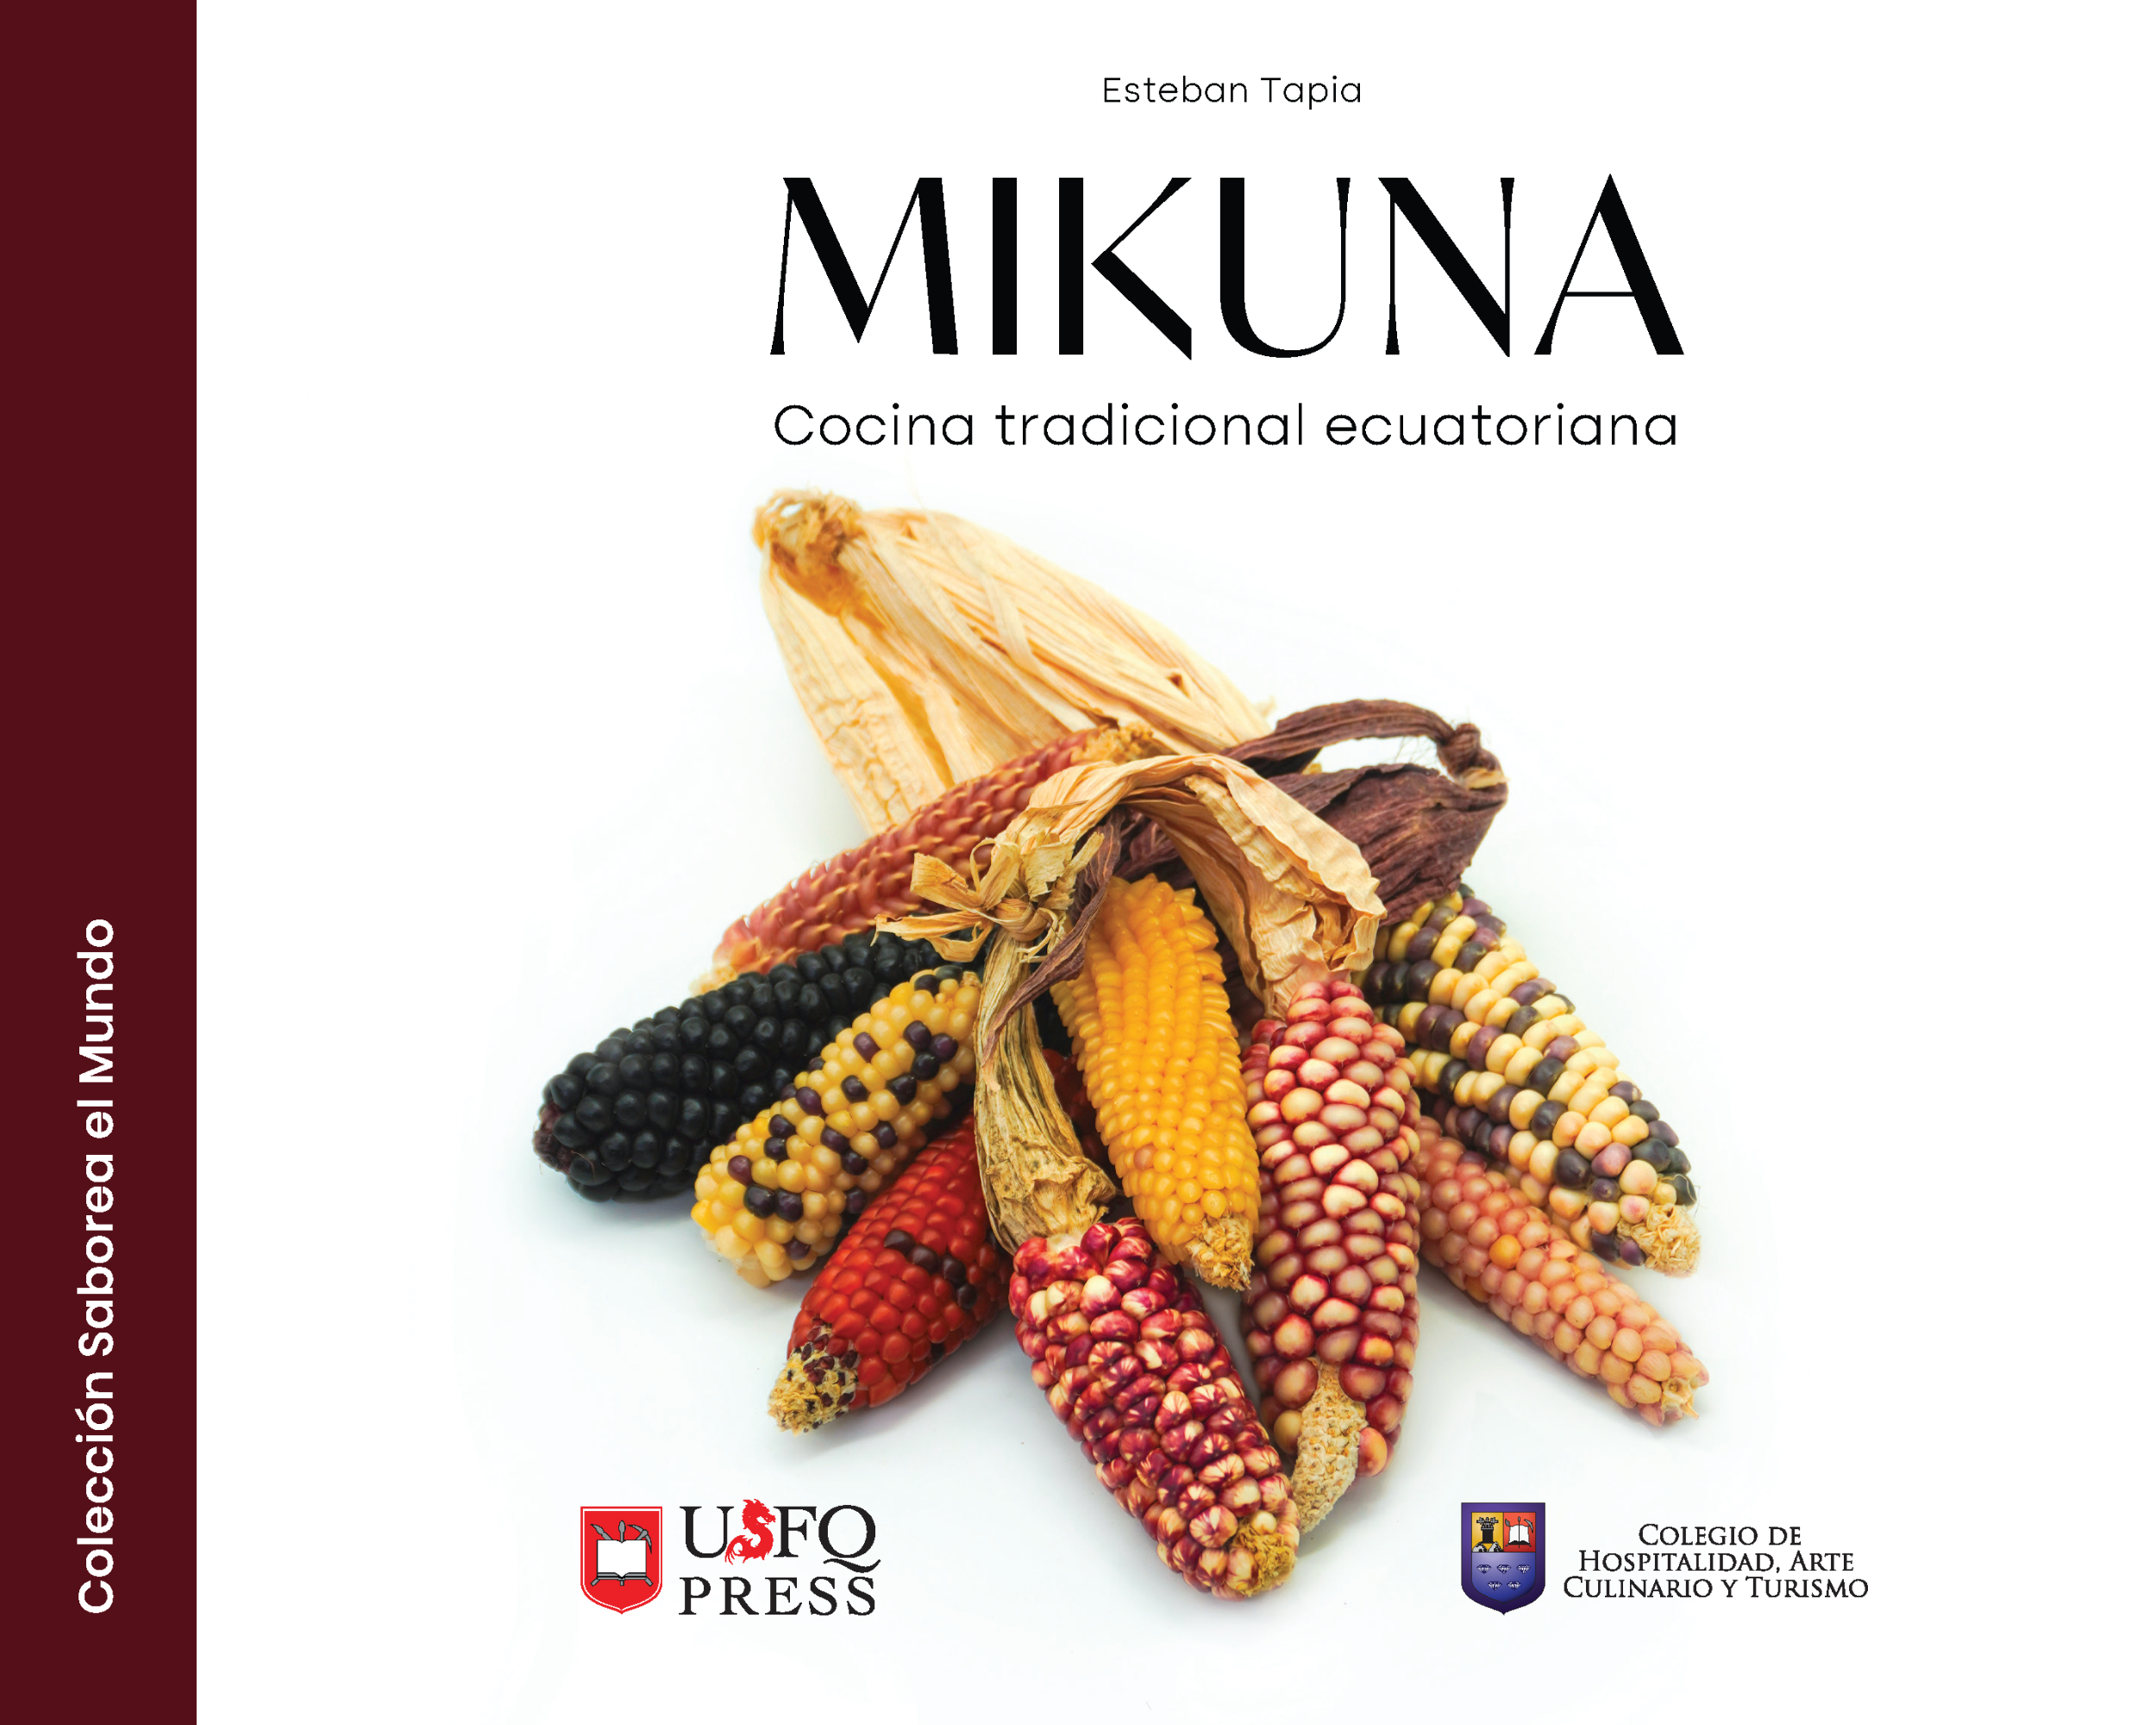 Imagen de portada del libro Mikuna, cocina tradicional ecuatoriana